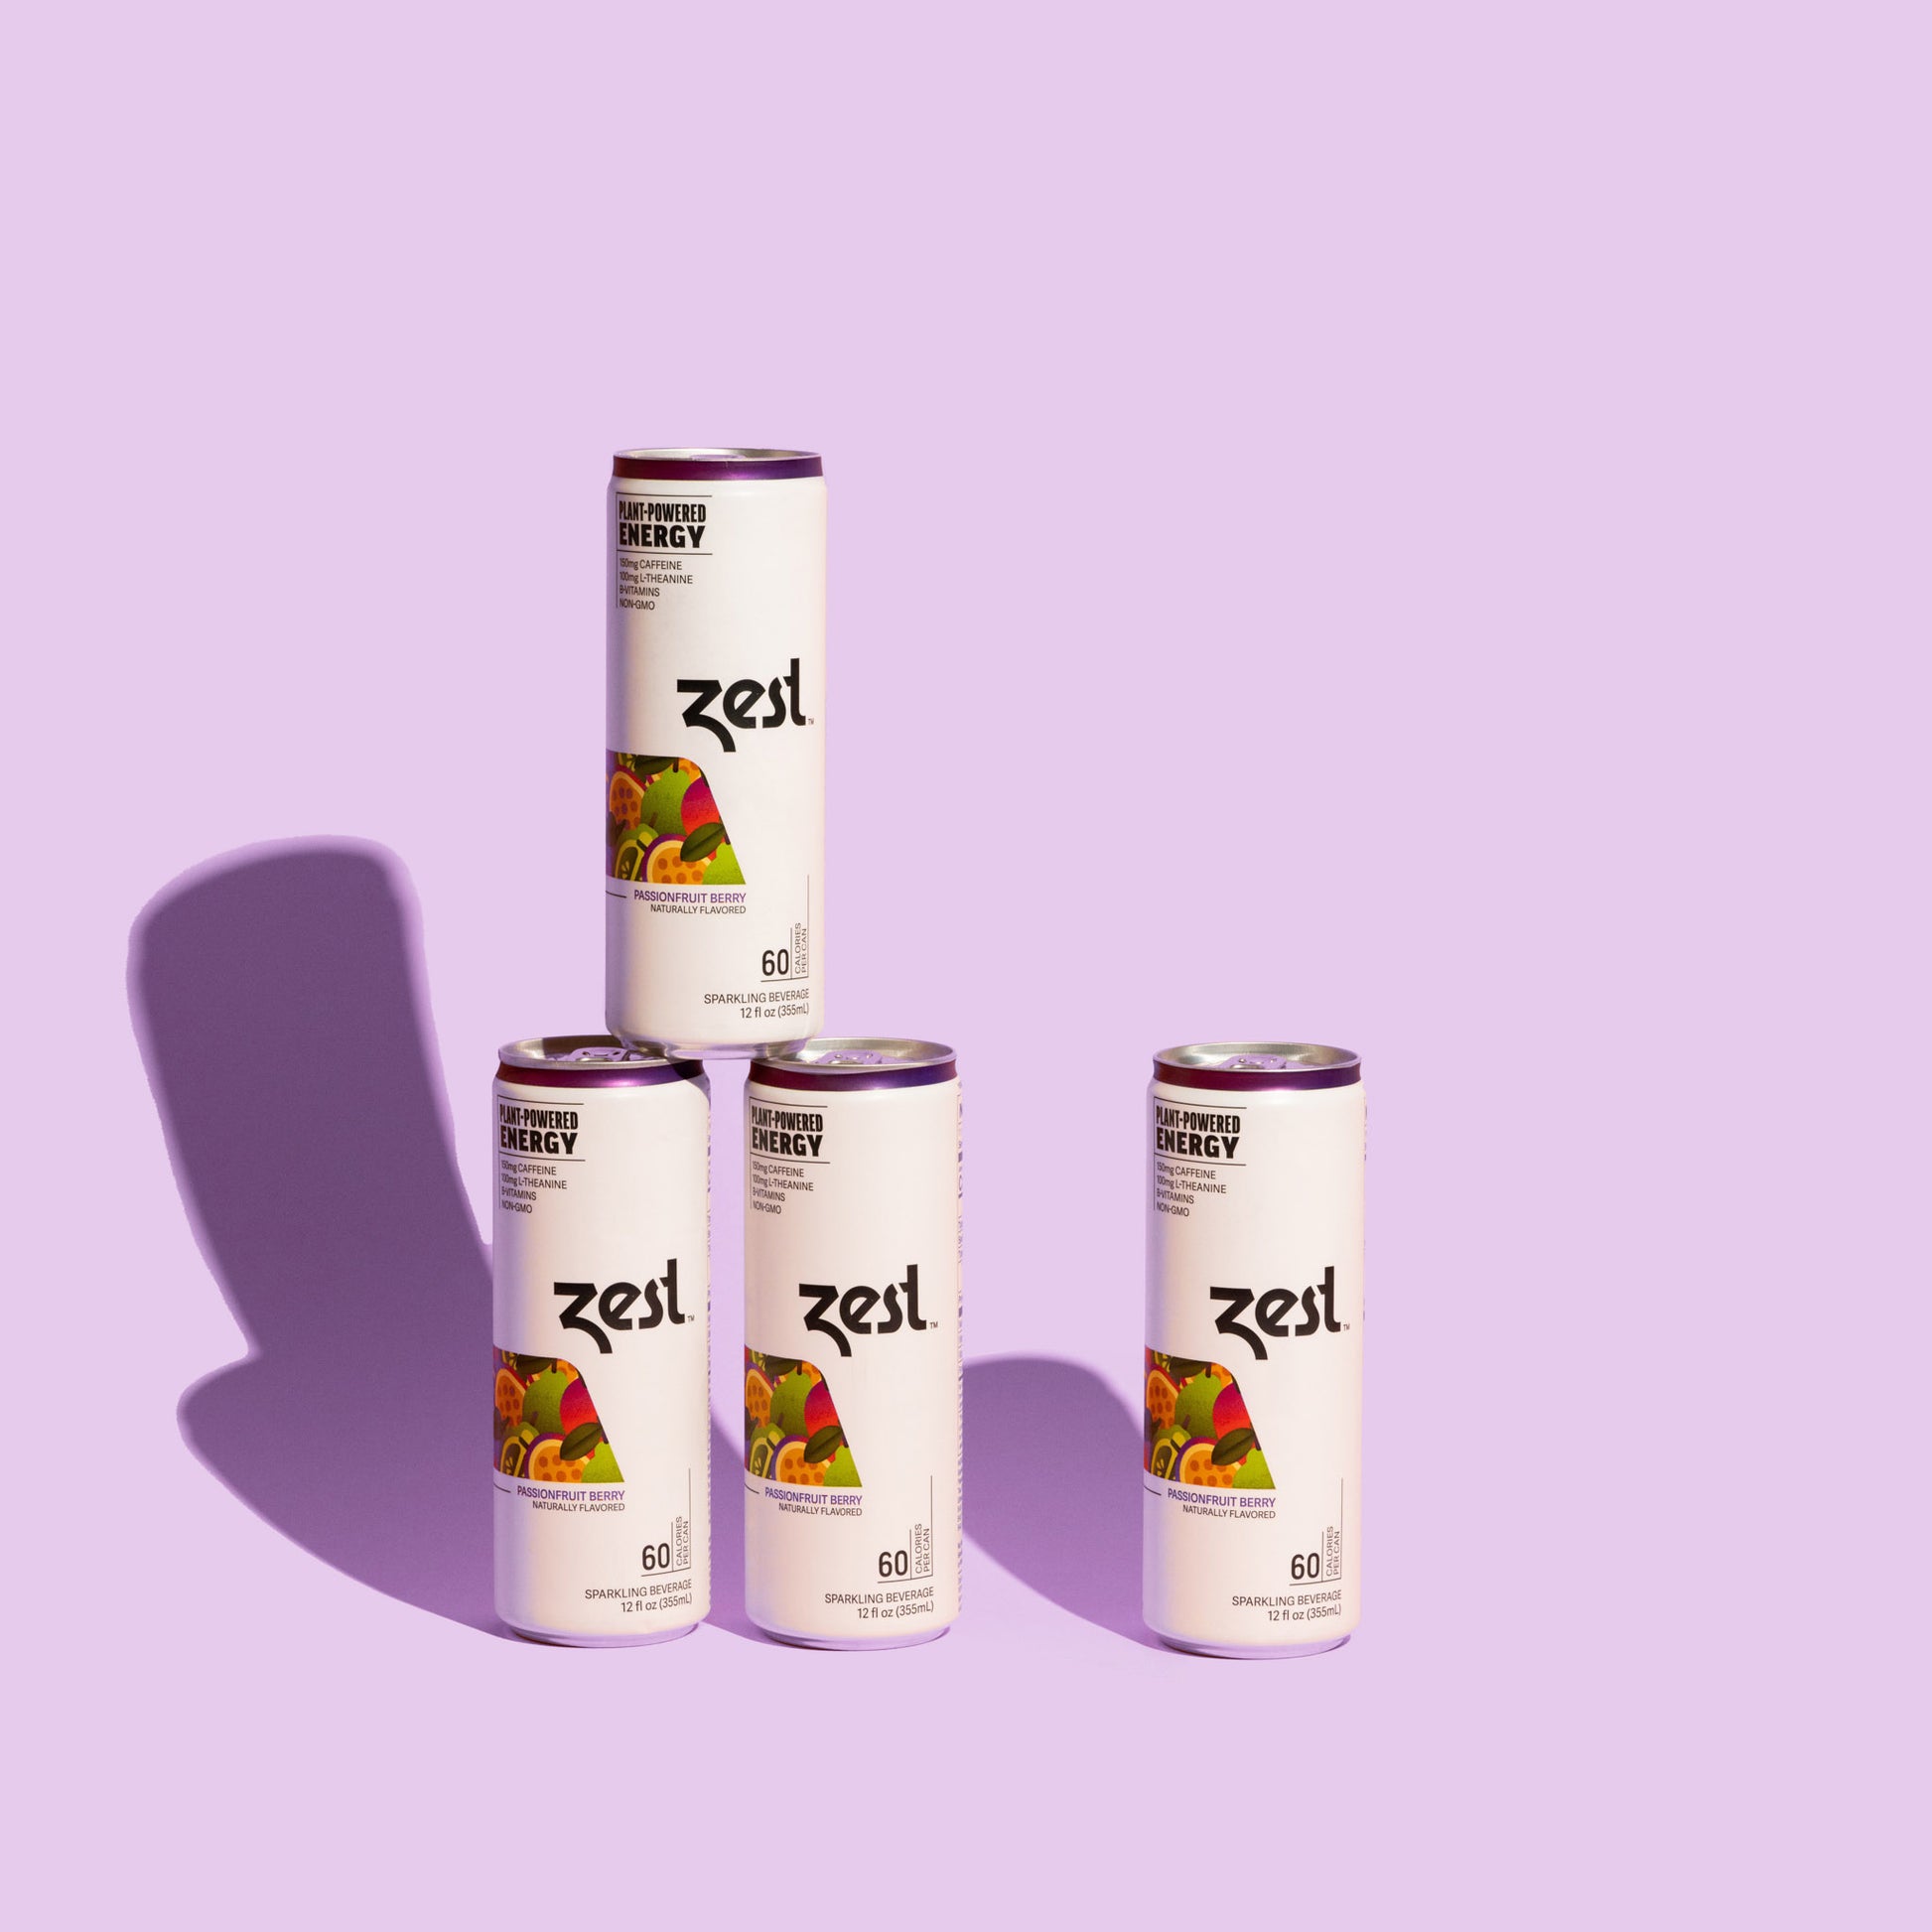 Zest Passionfruit Berry Plant-Powered Energy - High Caffeine Energy Drinks